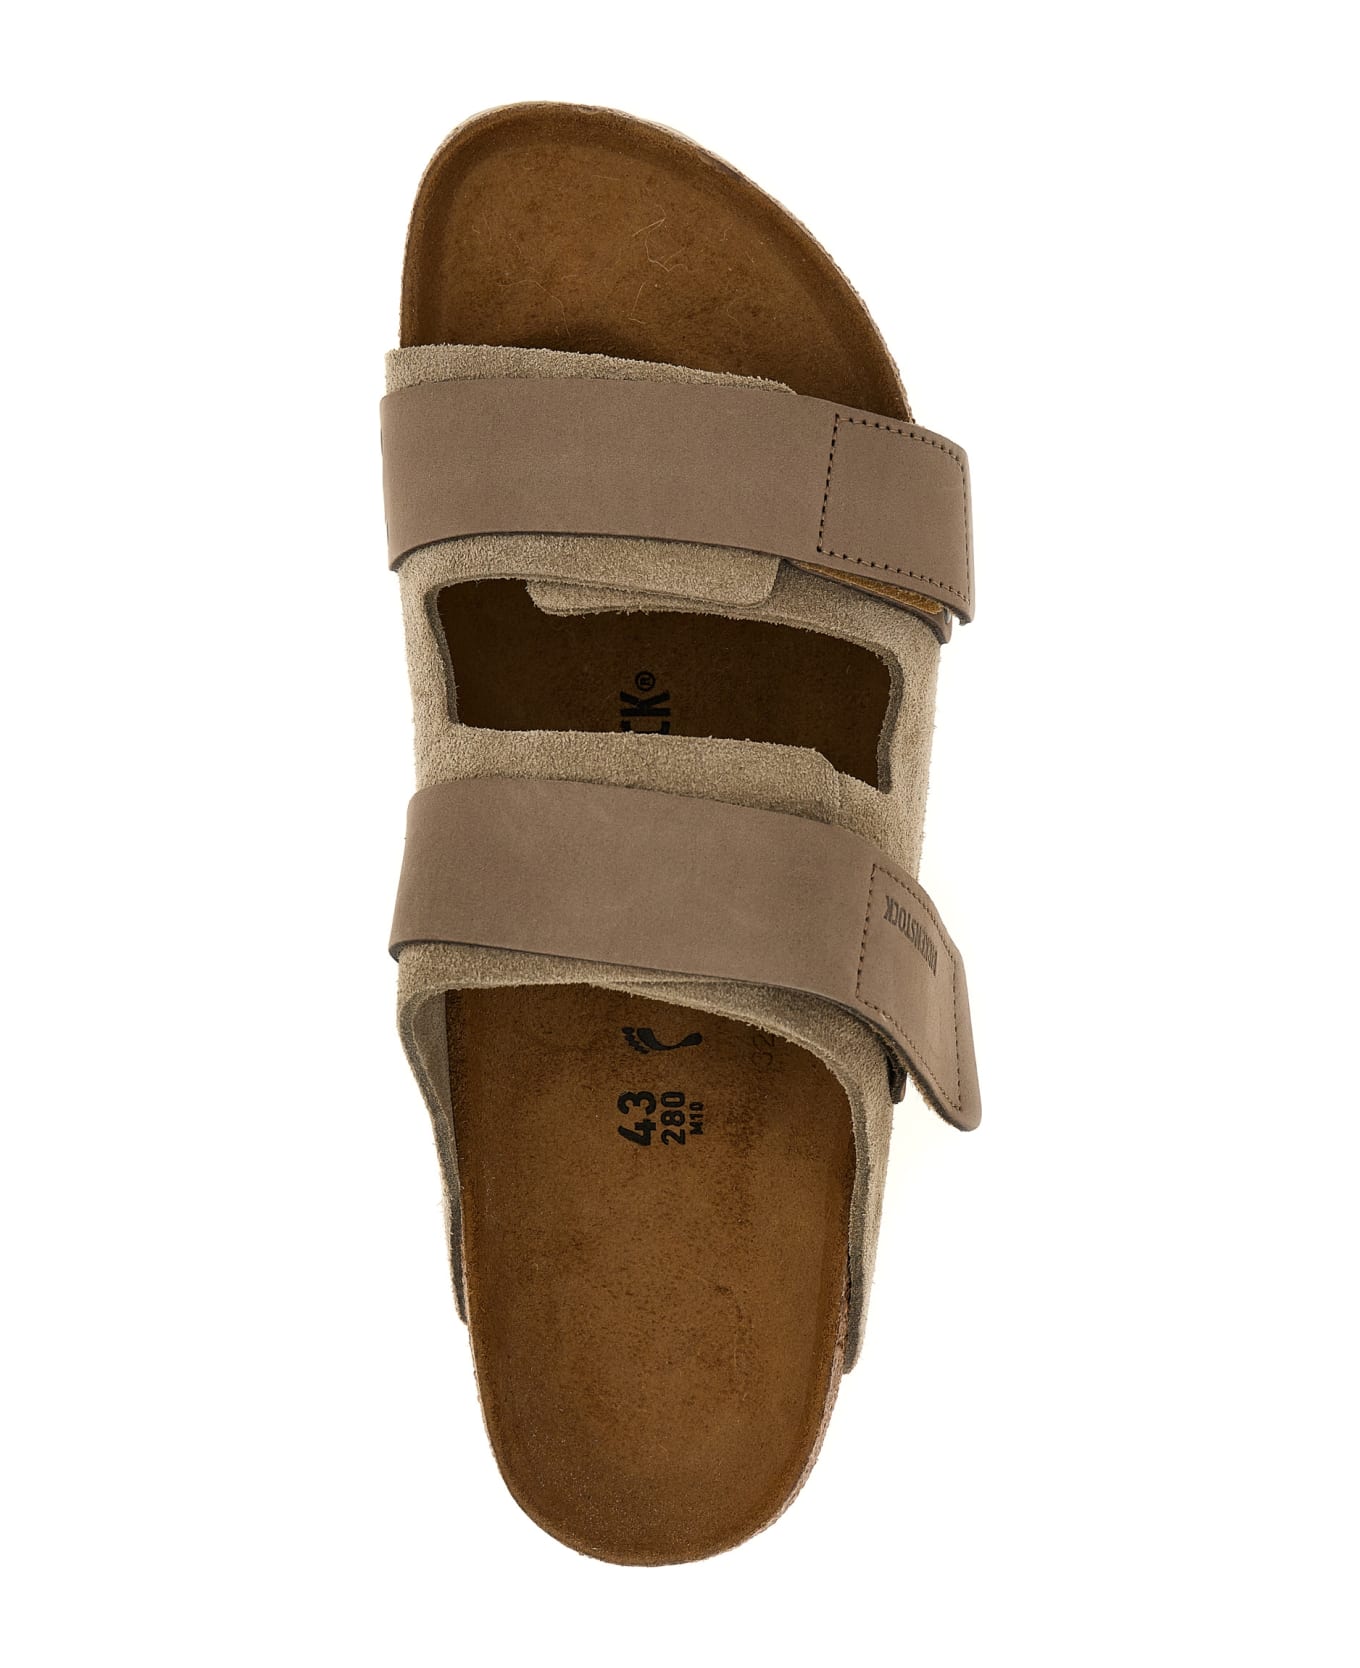 Birkenstock 'uji' Sandals - Taupe